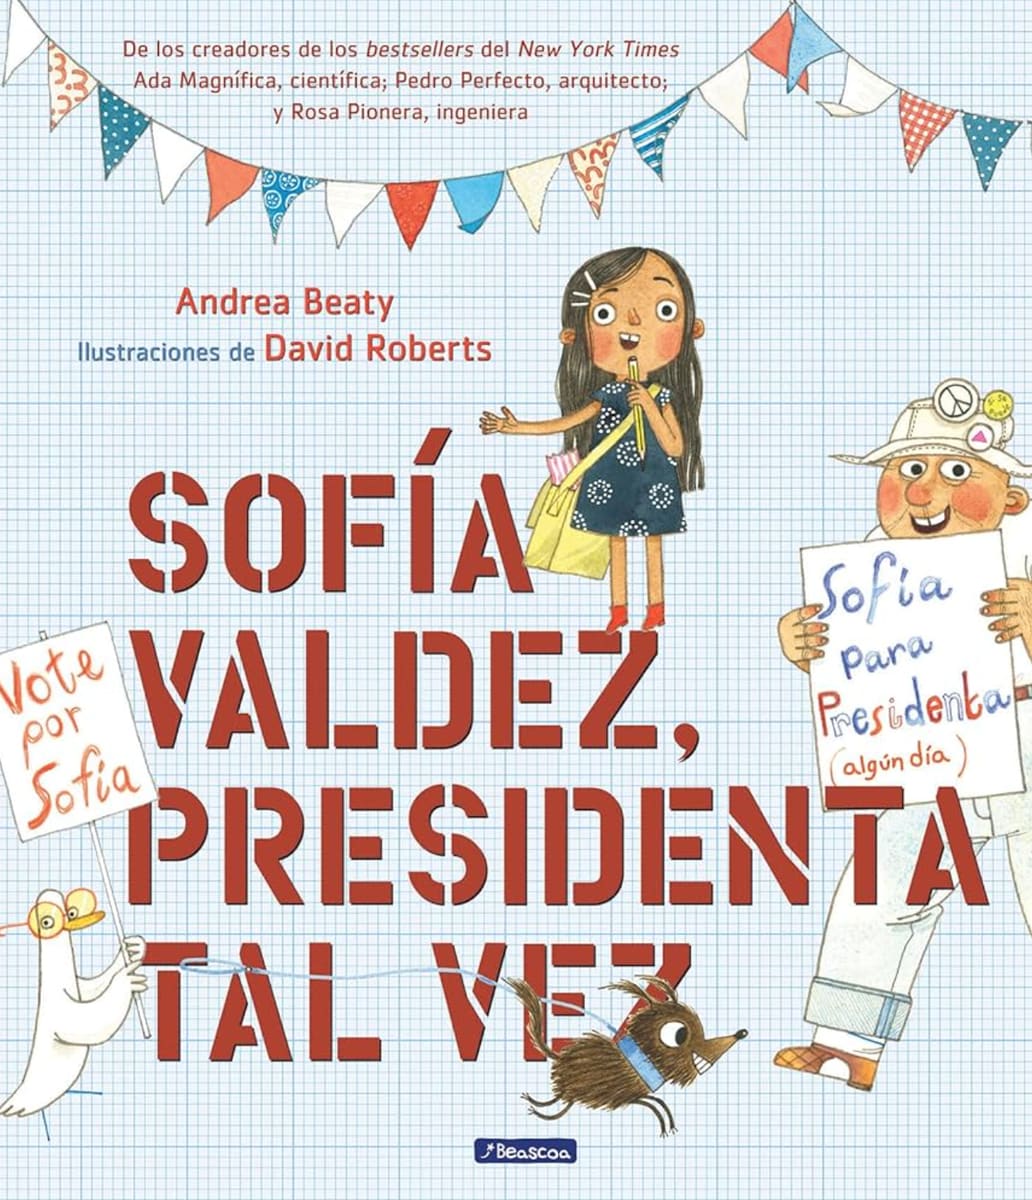 "Sofía Valdez, presidenta tal vez" by Andrea Beaty